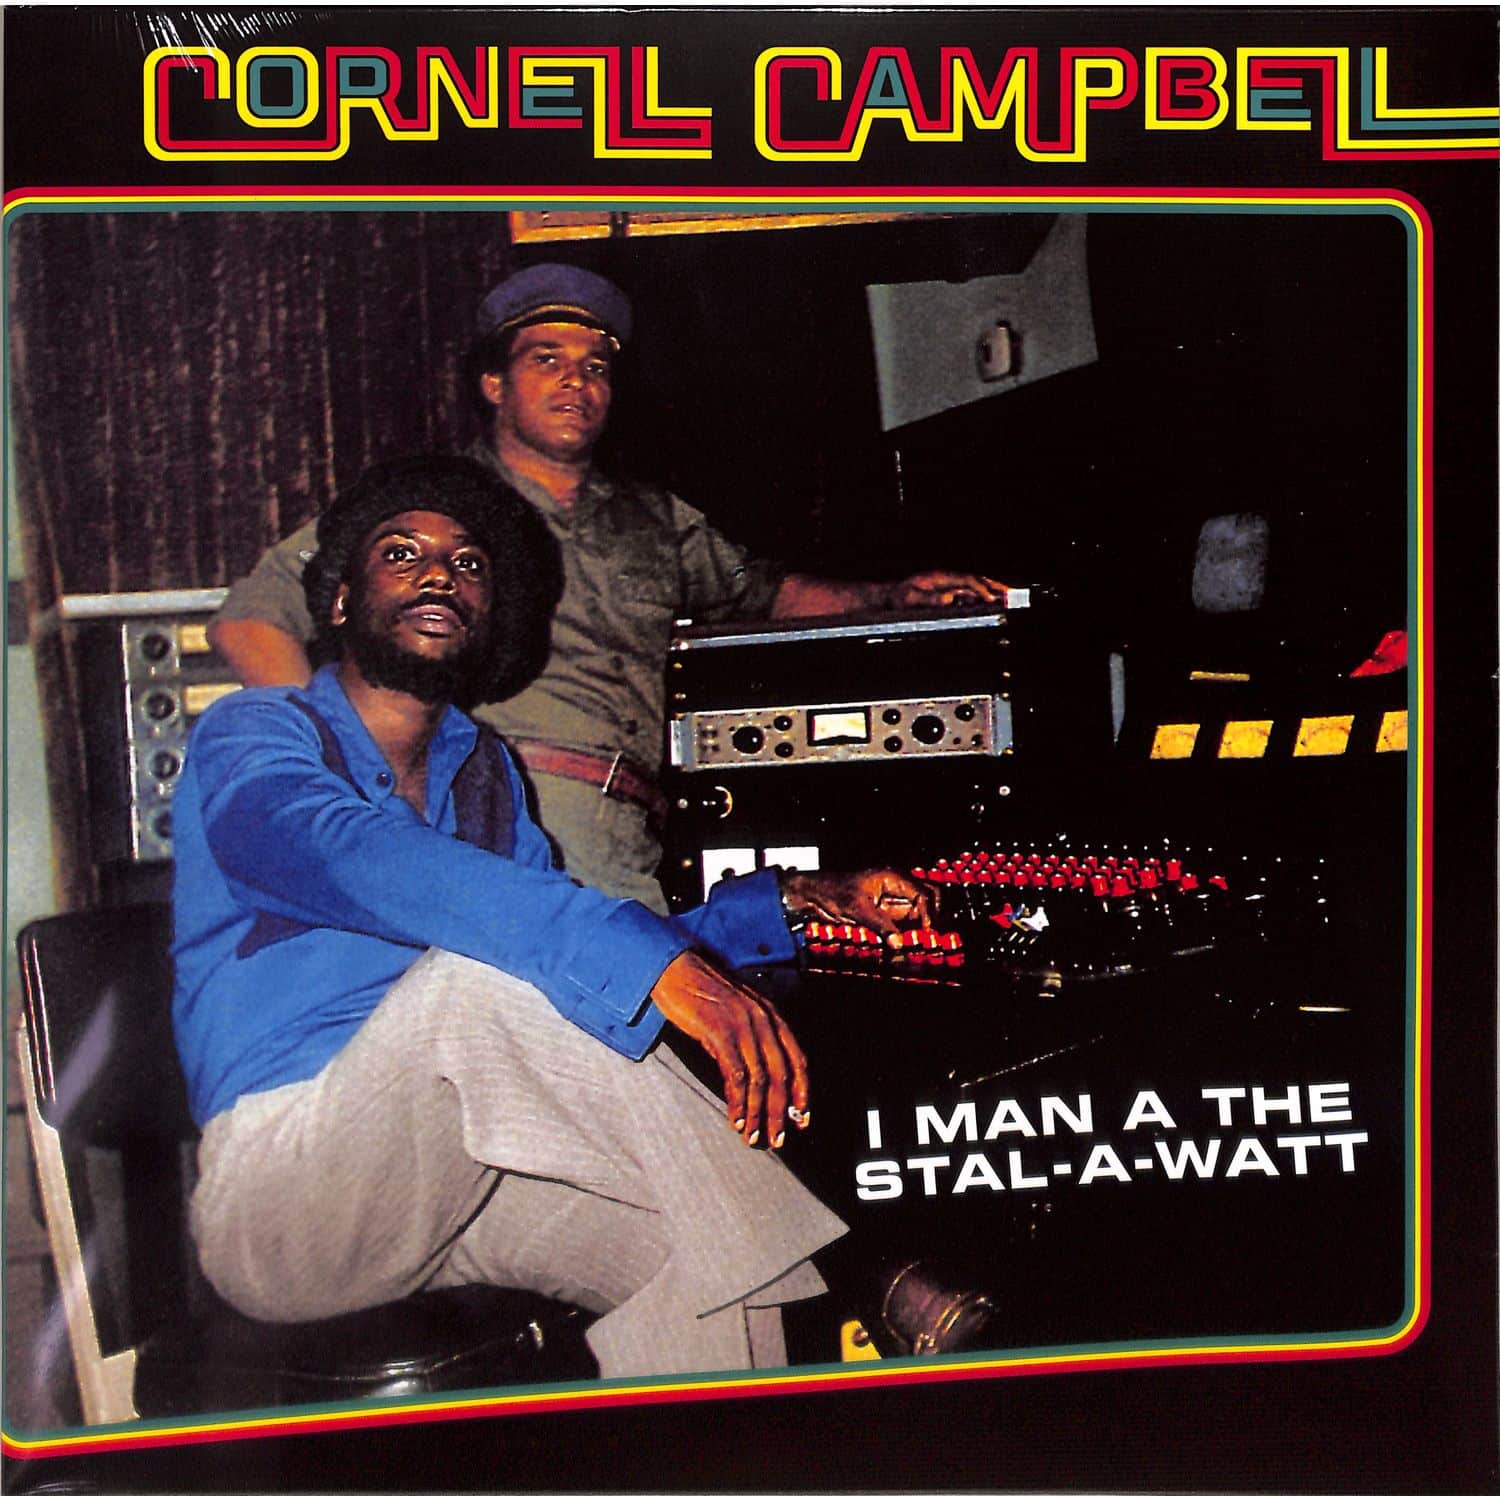 Cornell Campbell - I MAN A THE STAL-A-WATT 